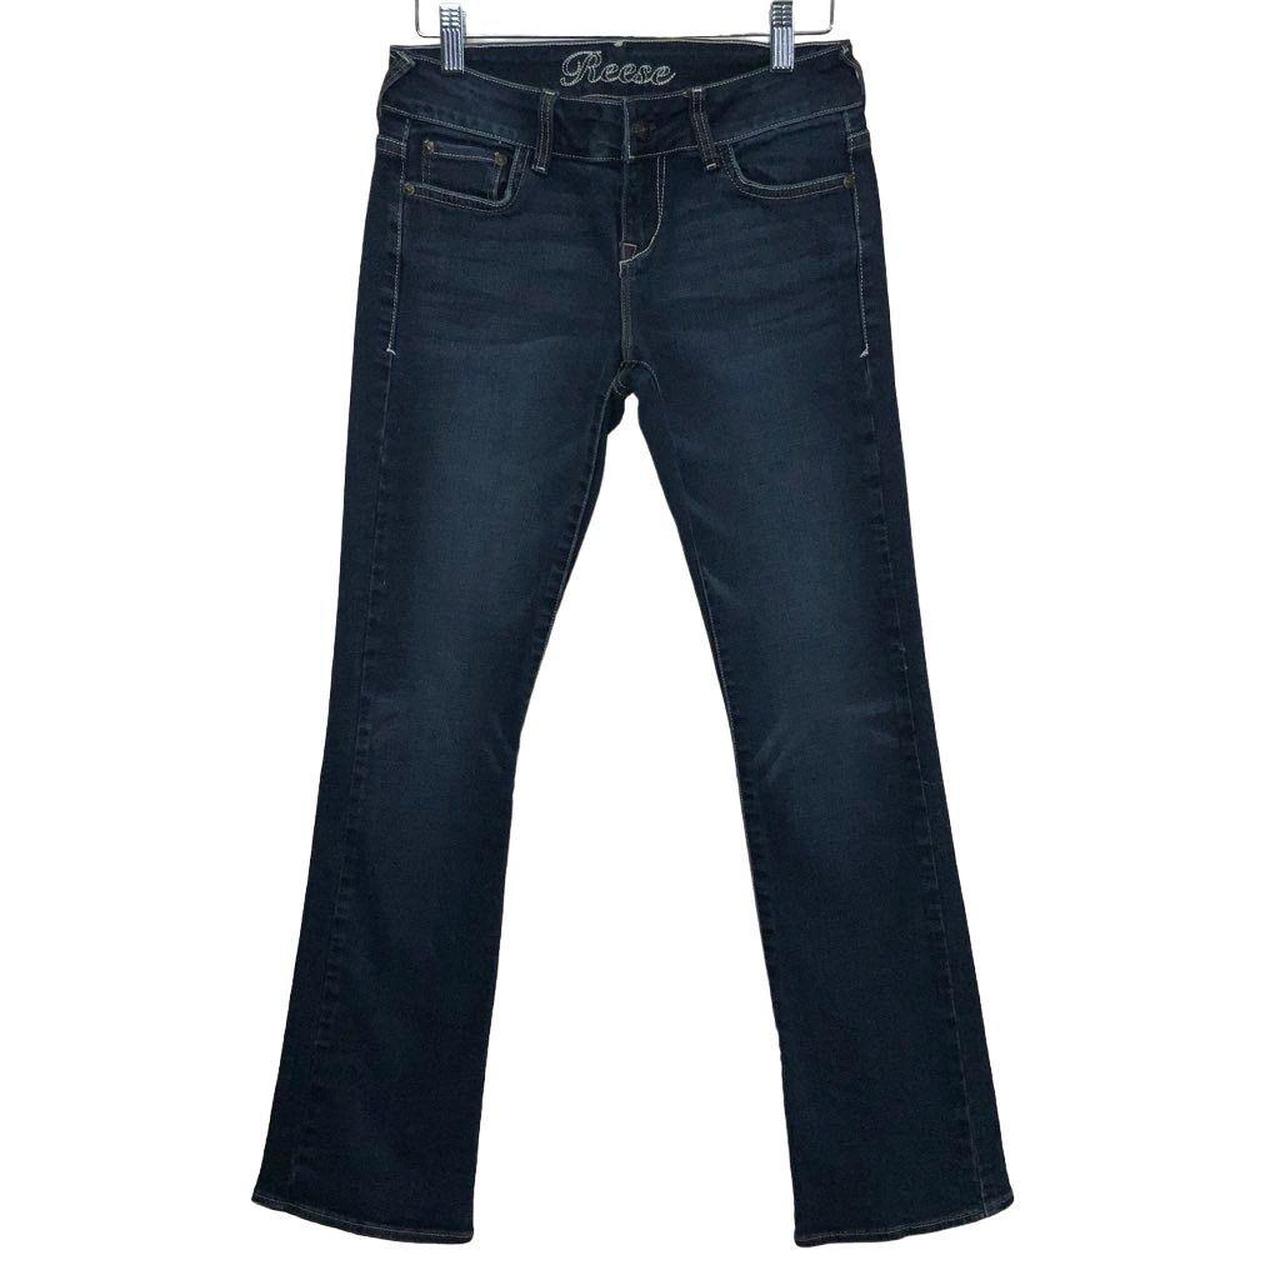 dELiA*s Delia’s Reese Bootcut Jeans size 1/2 dark... - Depop